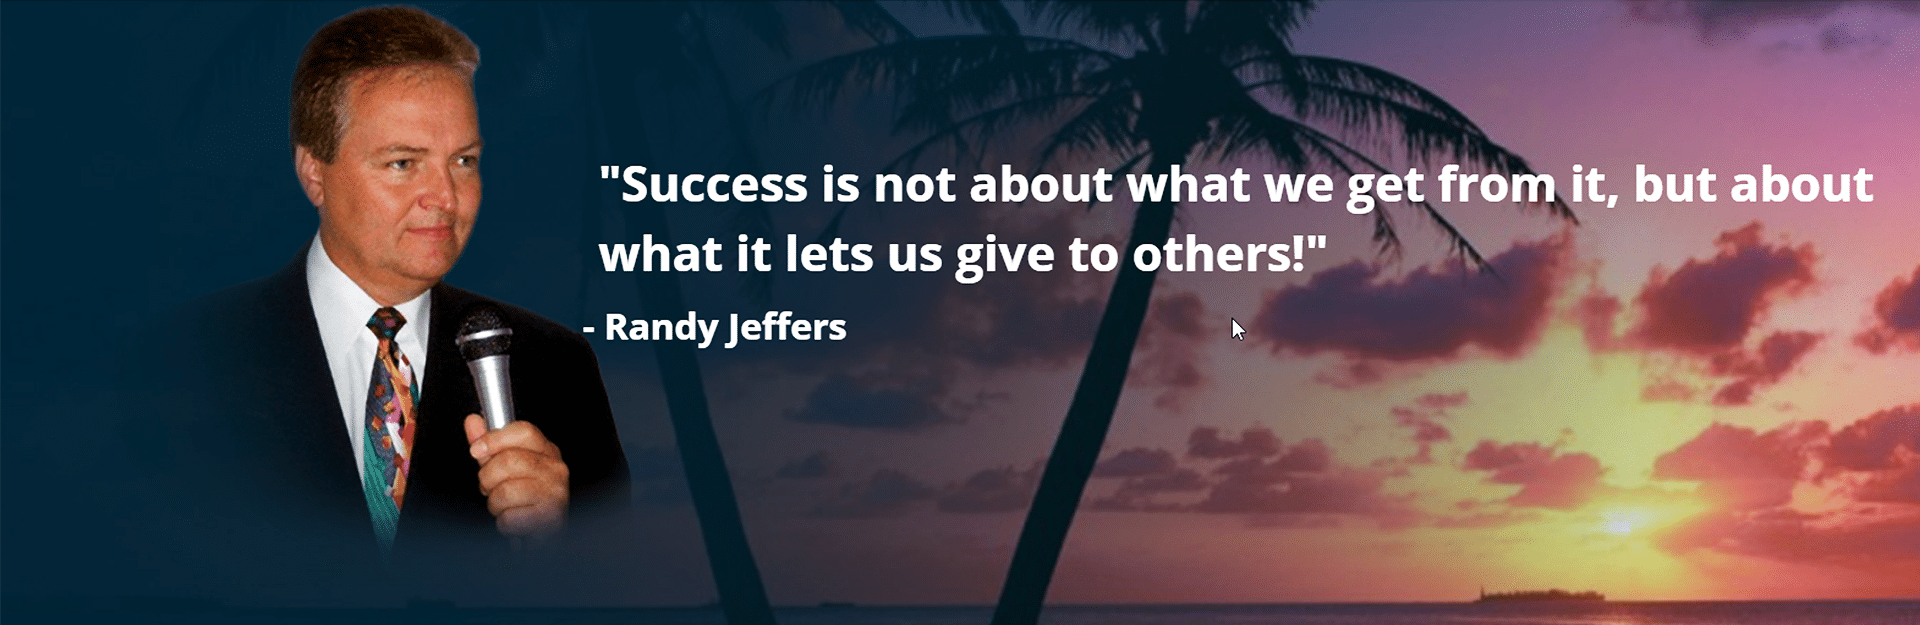 Randy Jeffers on Success